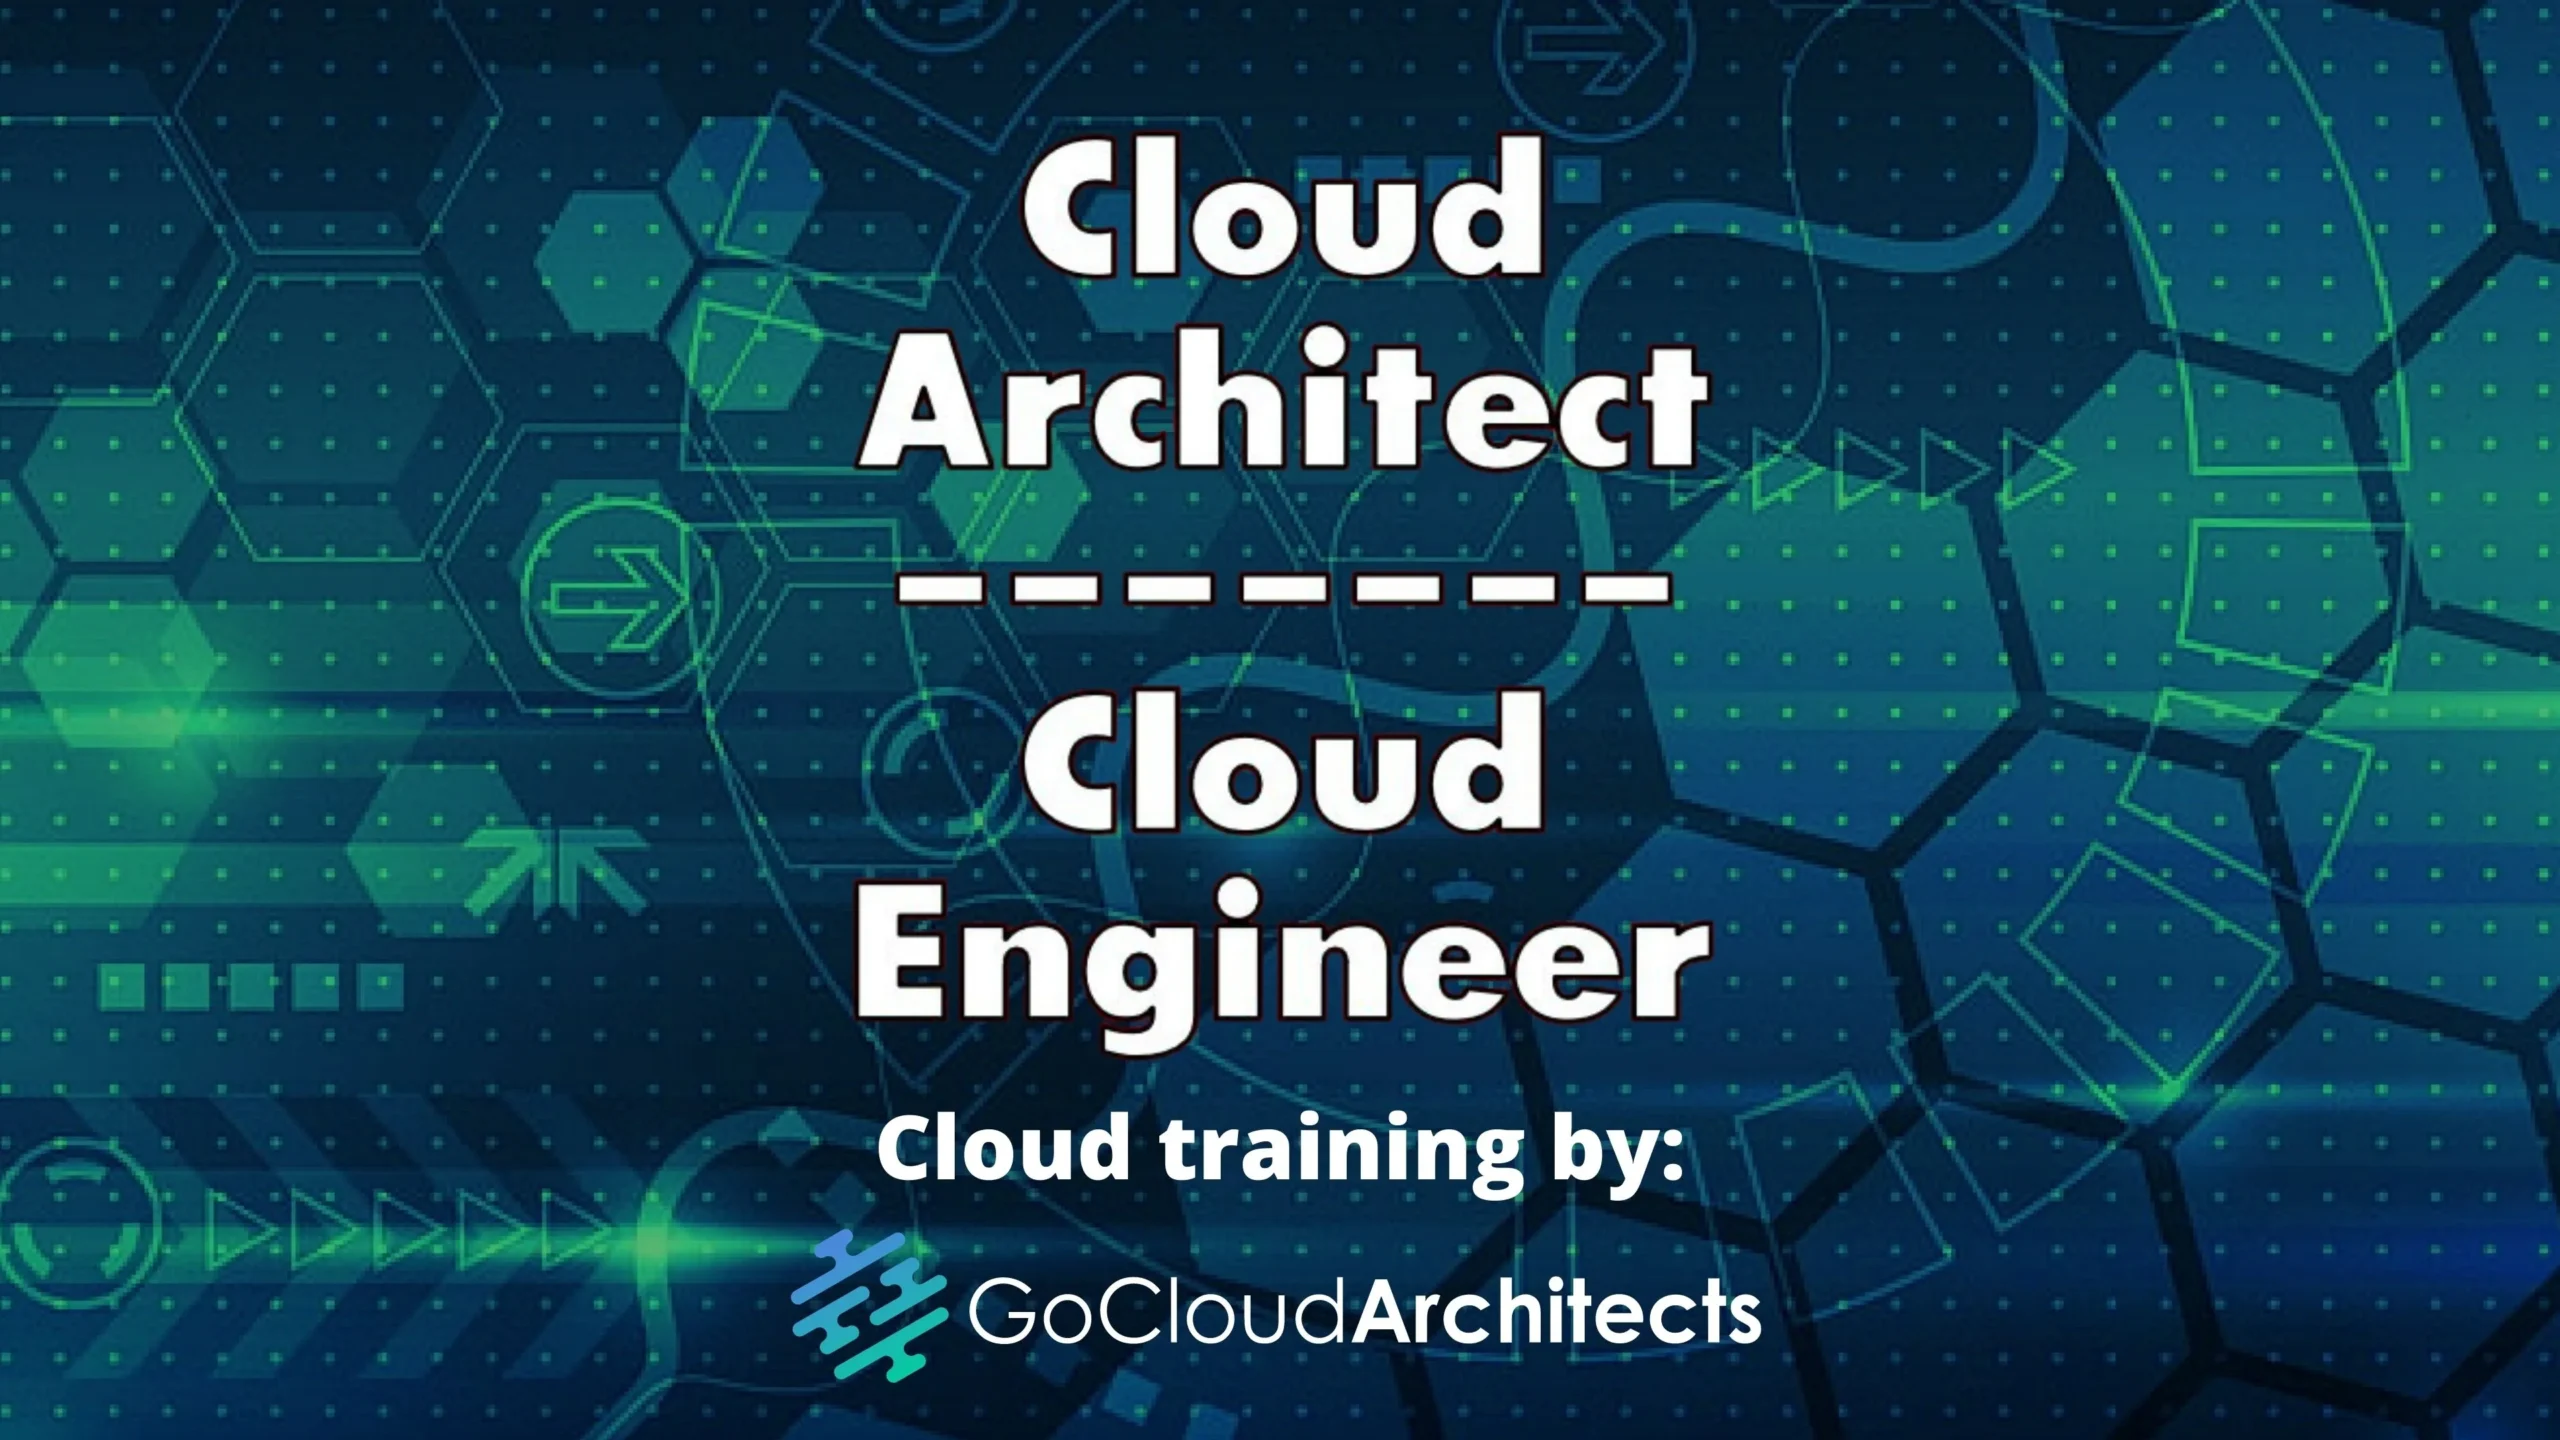 Go-Cloud-Architects-4 (1)